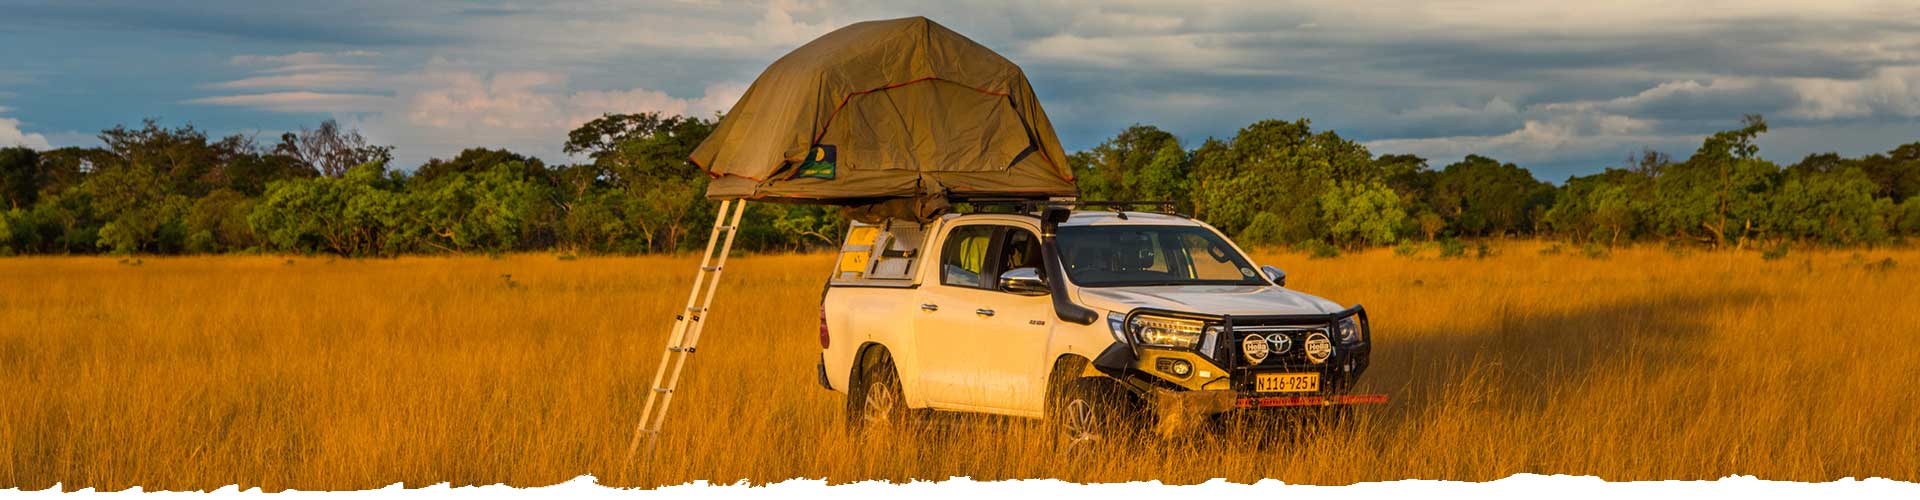 Autohuur-Namibie-Toyota-Safari-3.0TD-4x4-2pax-banner